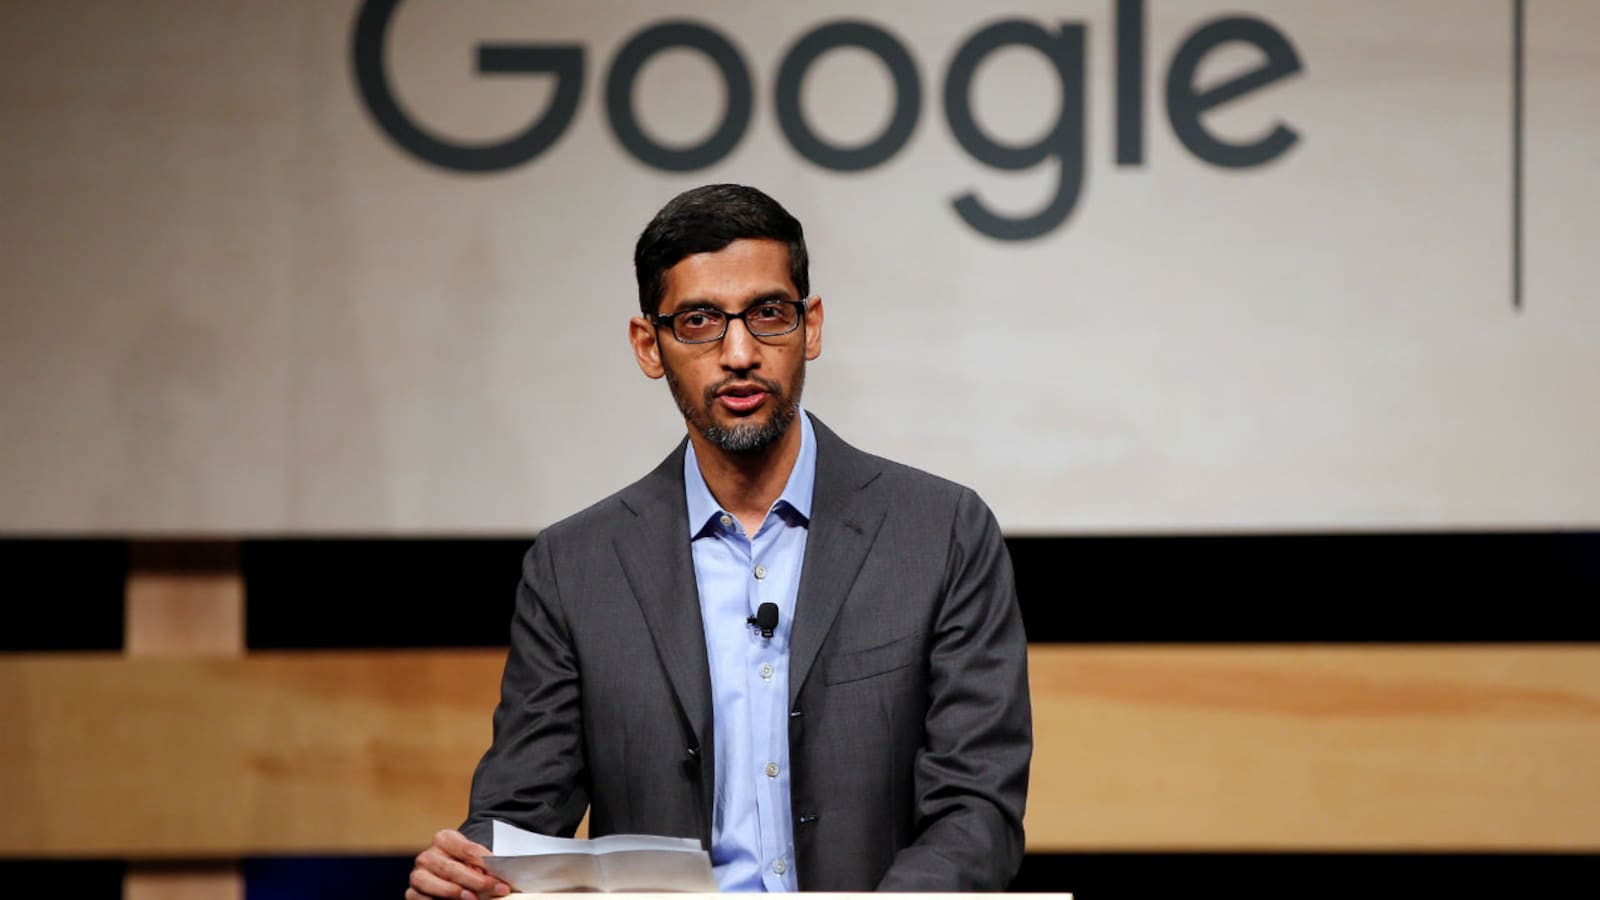 Sundar Pichai advises Google employees not to equate fun and money.